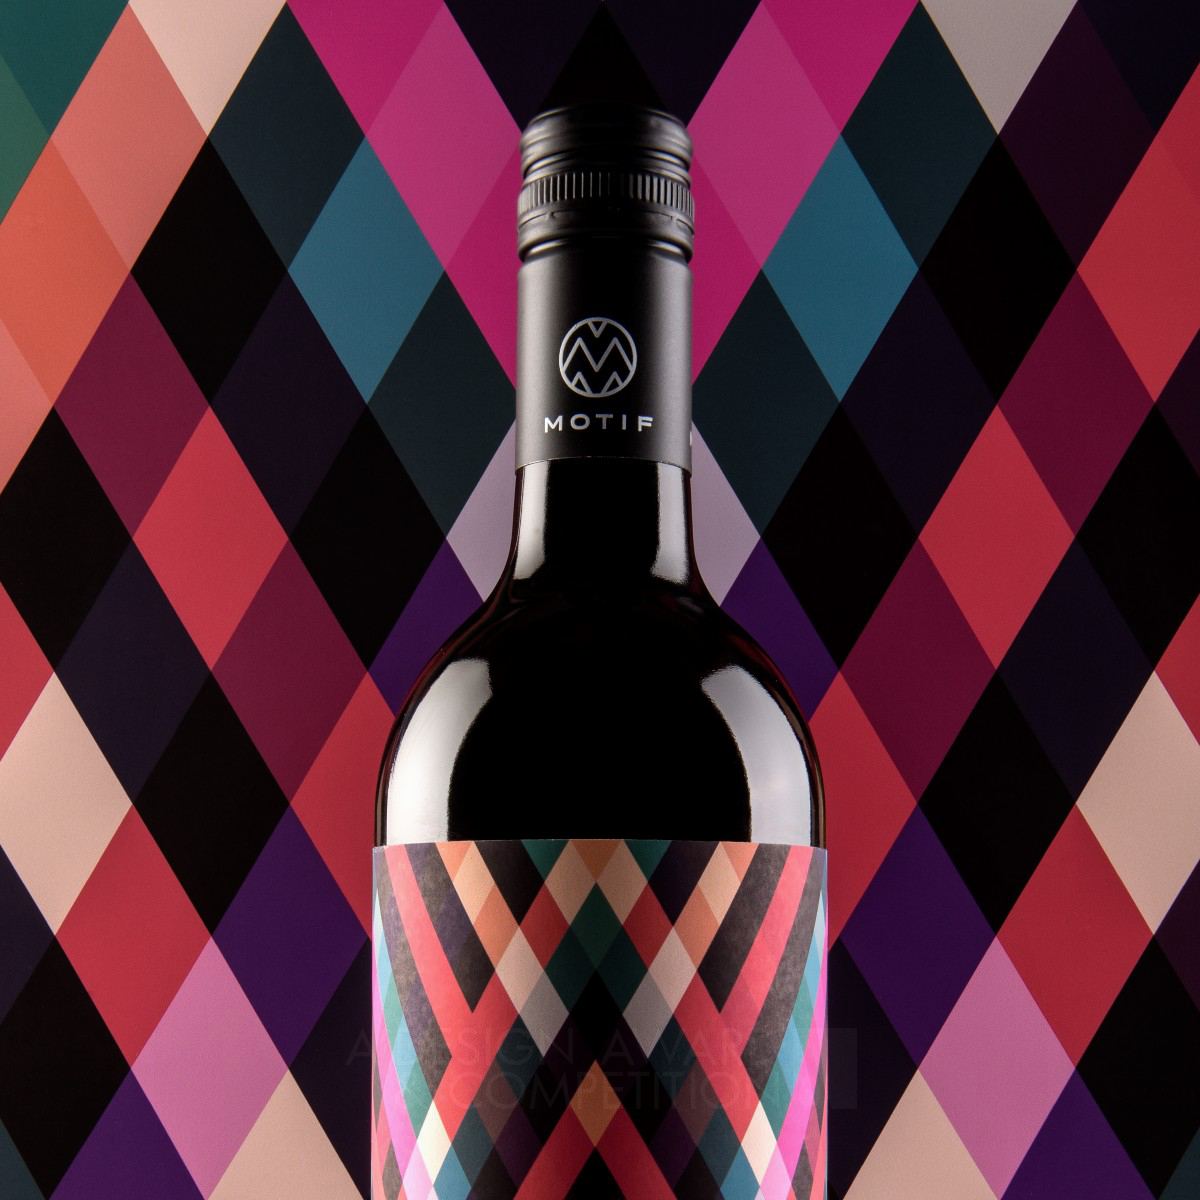 Motif Wine Wine Packaging Design by En Garde Interdisciplinary GmbH